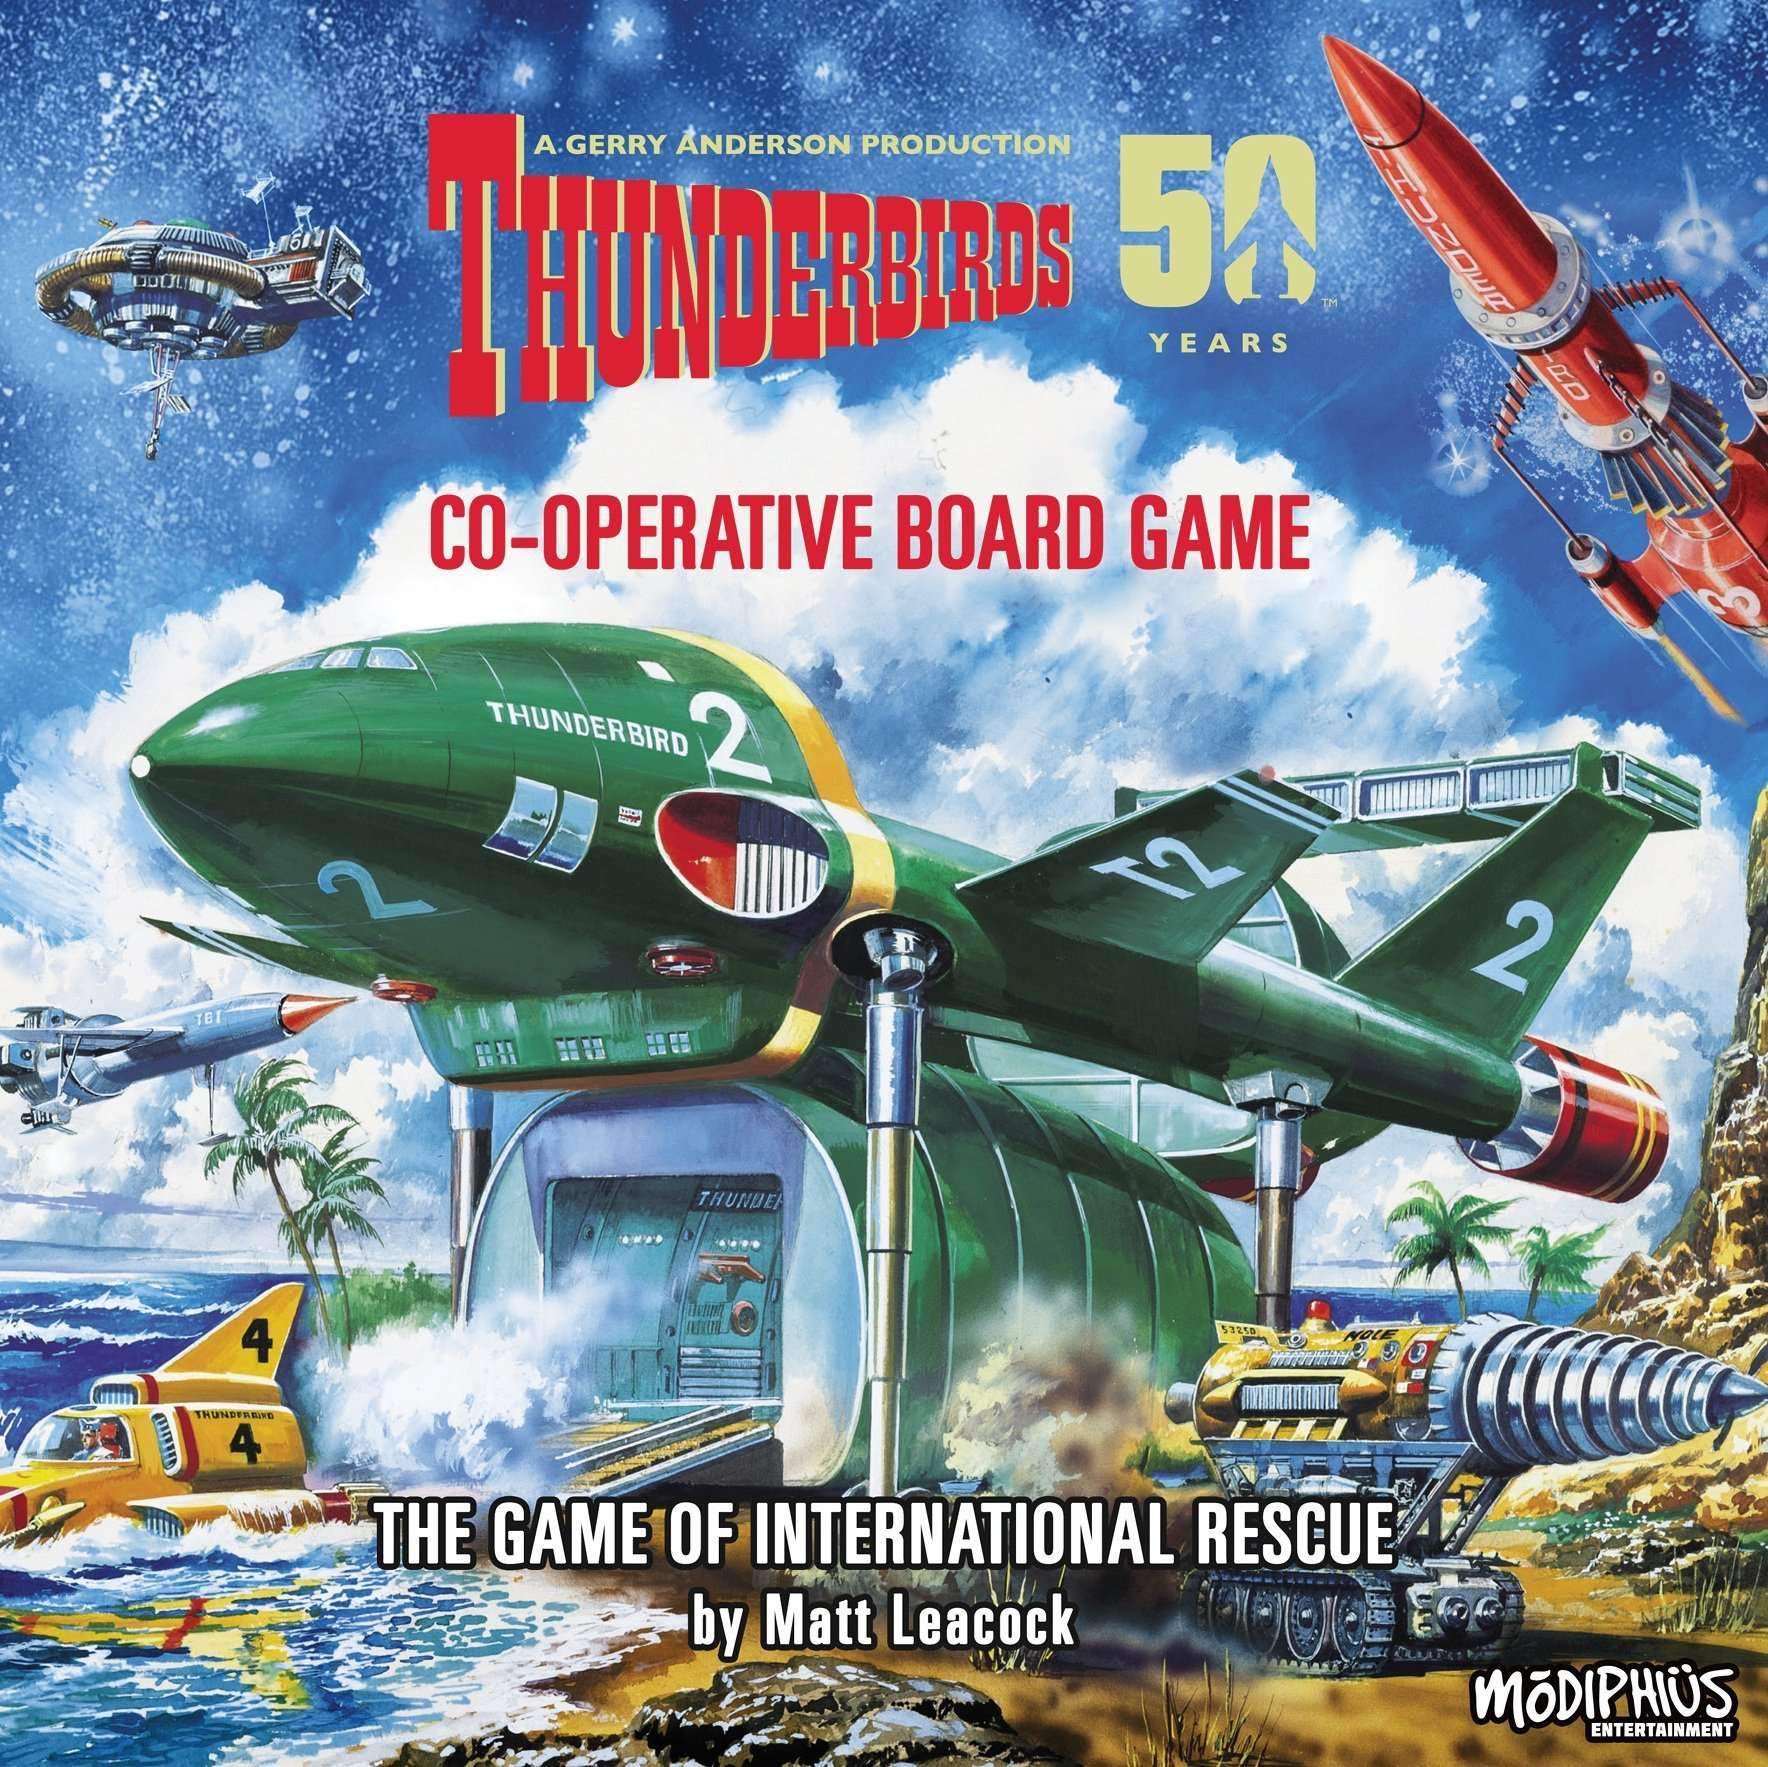 Thunderbirds Co-operative Board Game Retail Retail Game ASYNCRON games